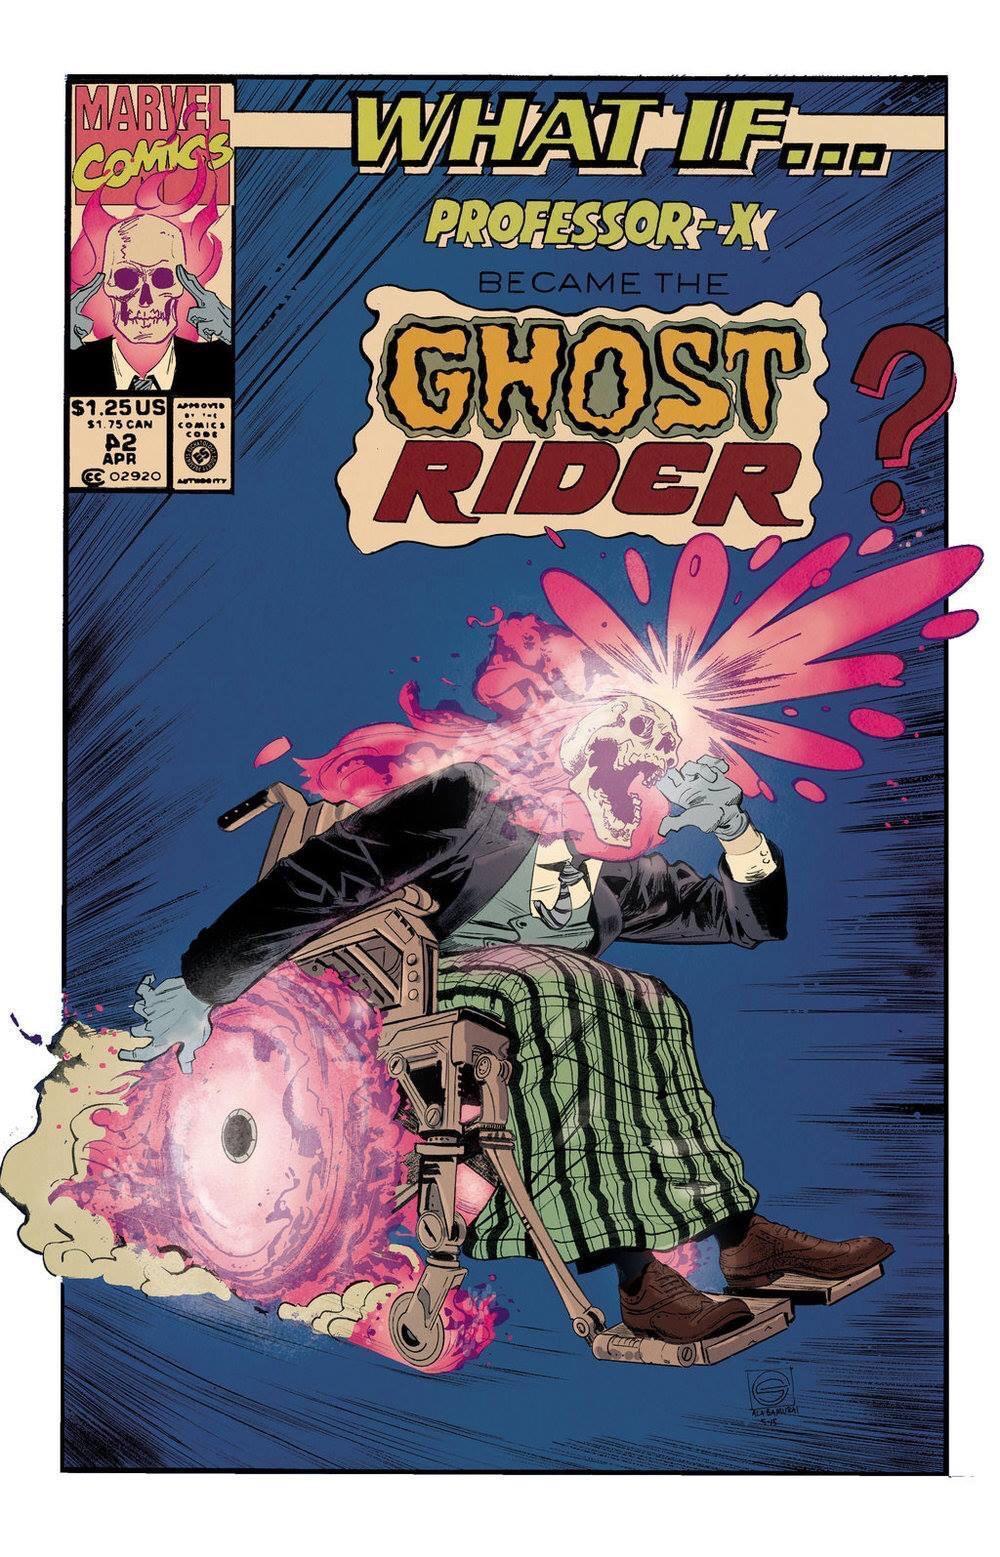 fresh memes - funny memes - if professor x become the ghost rider - Marvel Comics What Ifp Professor Xk Became The . Ghost Rider $1.25 Us On $1.75 Can Comics P2 Apr Cc 02920 ummy Cod Certa Kelaar